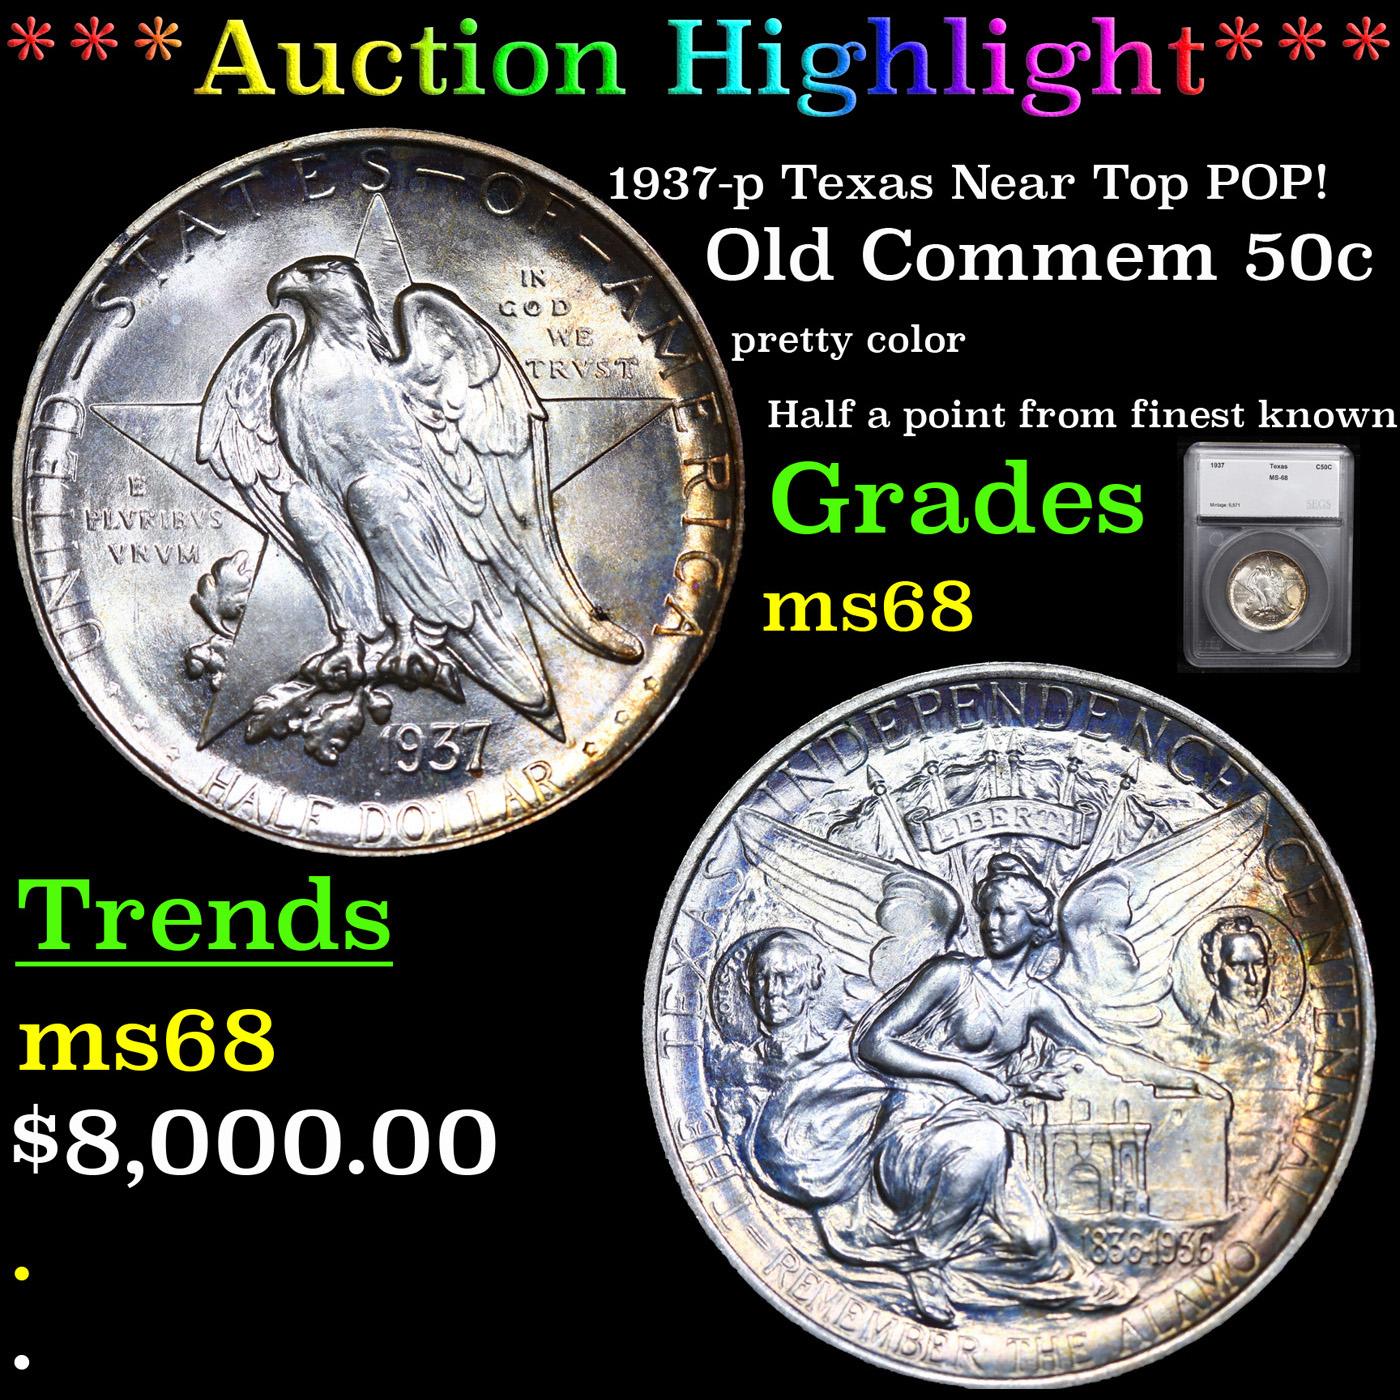 ***Auction Highlight*** 1937-p Texas Near Top POP! Old Commem Half Dollar 50c Graded ms68 By SEGS (f